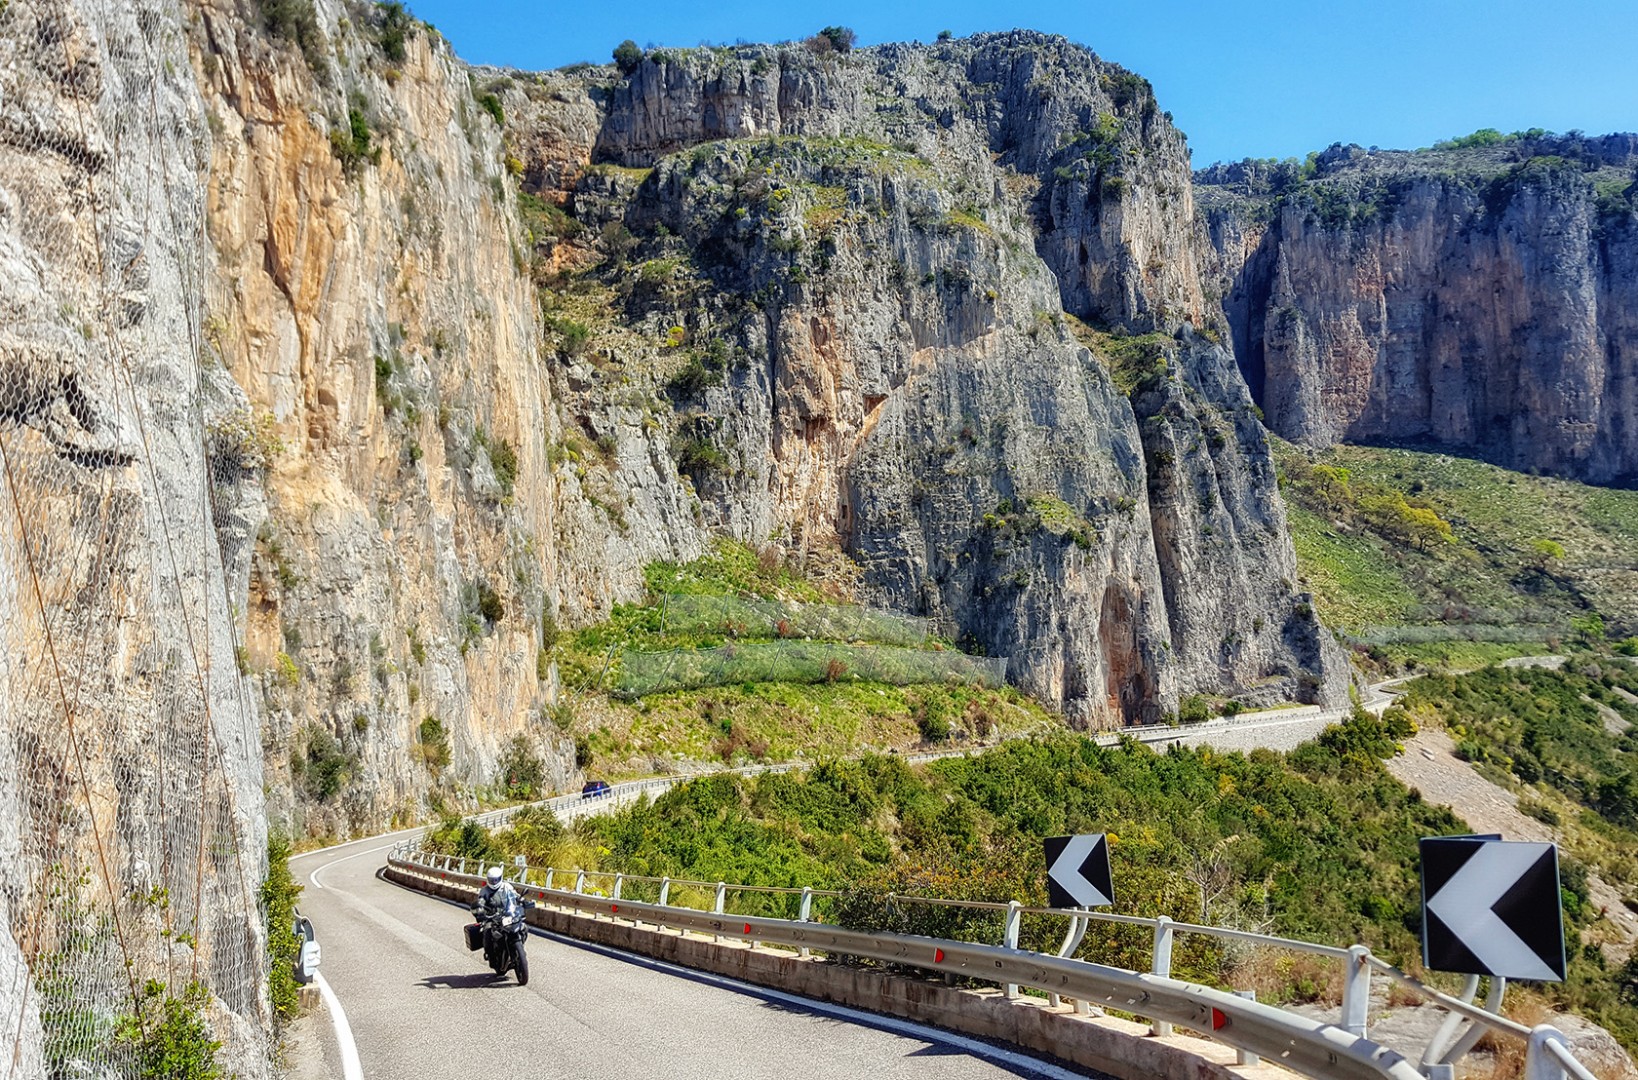 Ruta En Moto Sur De Roma & Sicilia